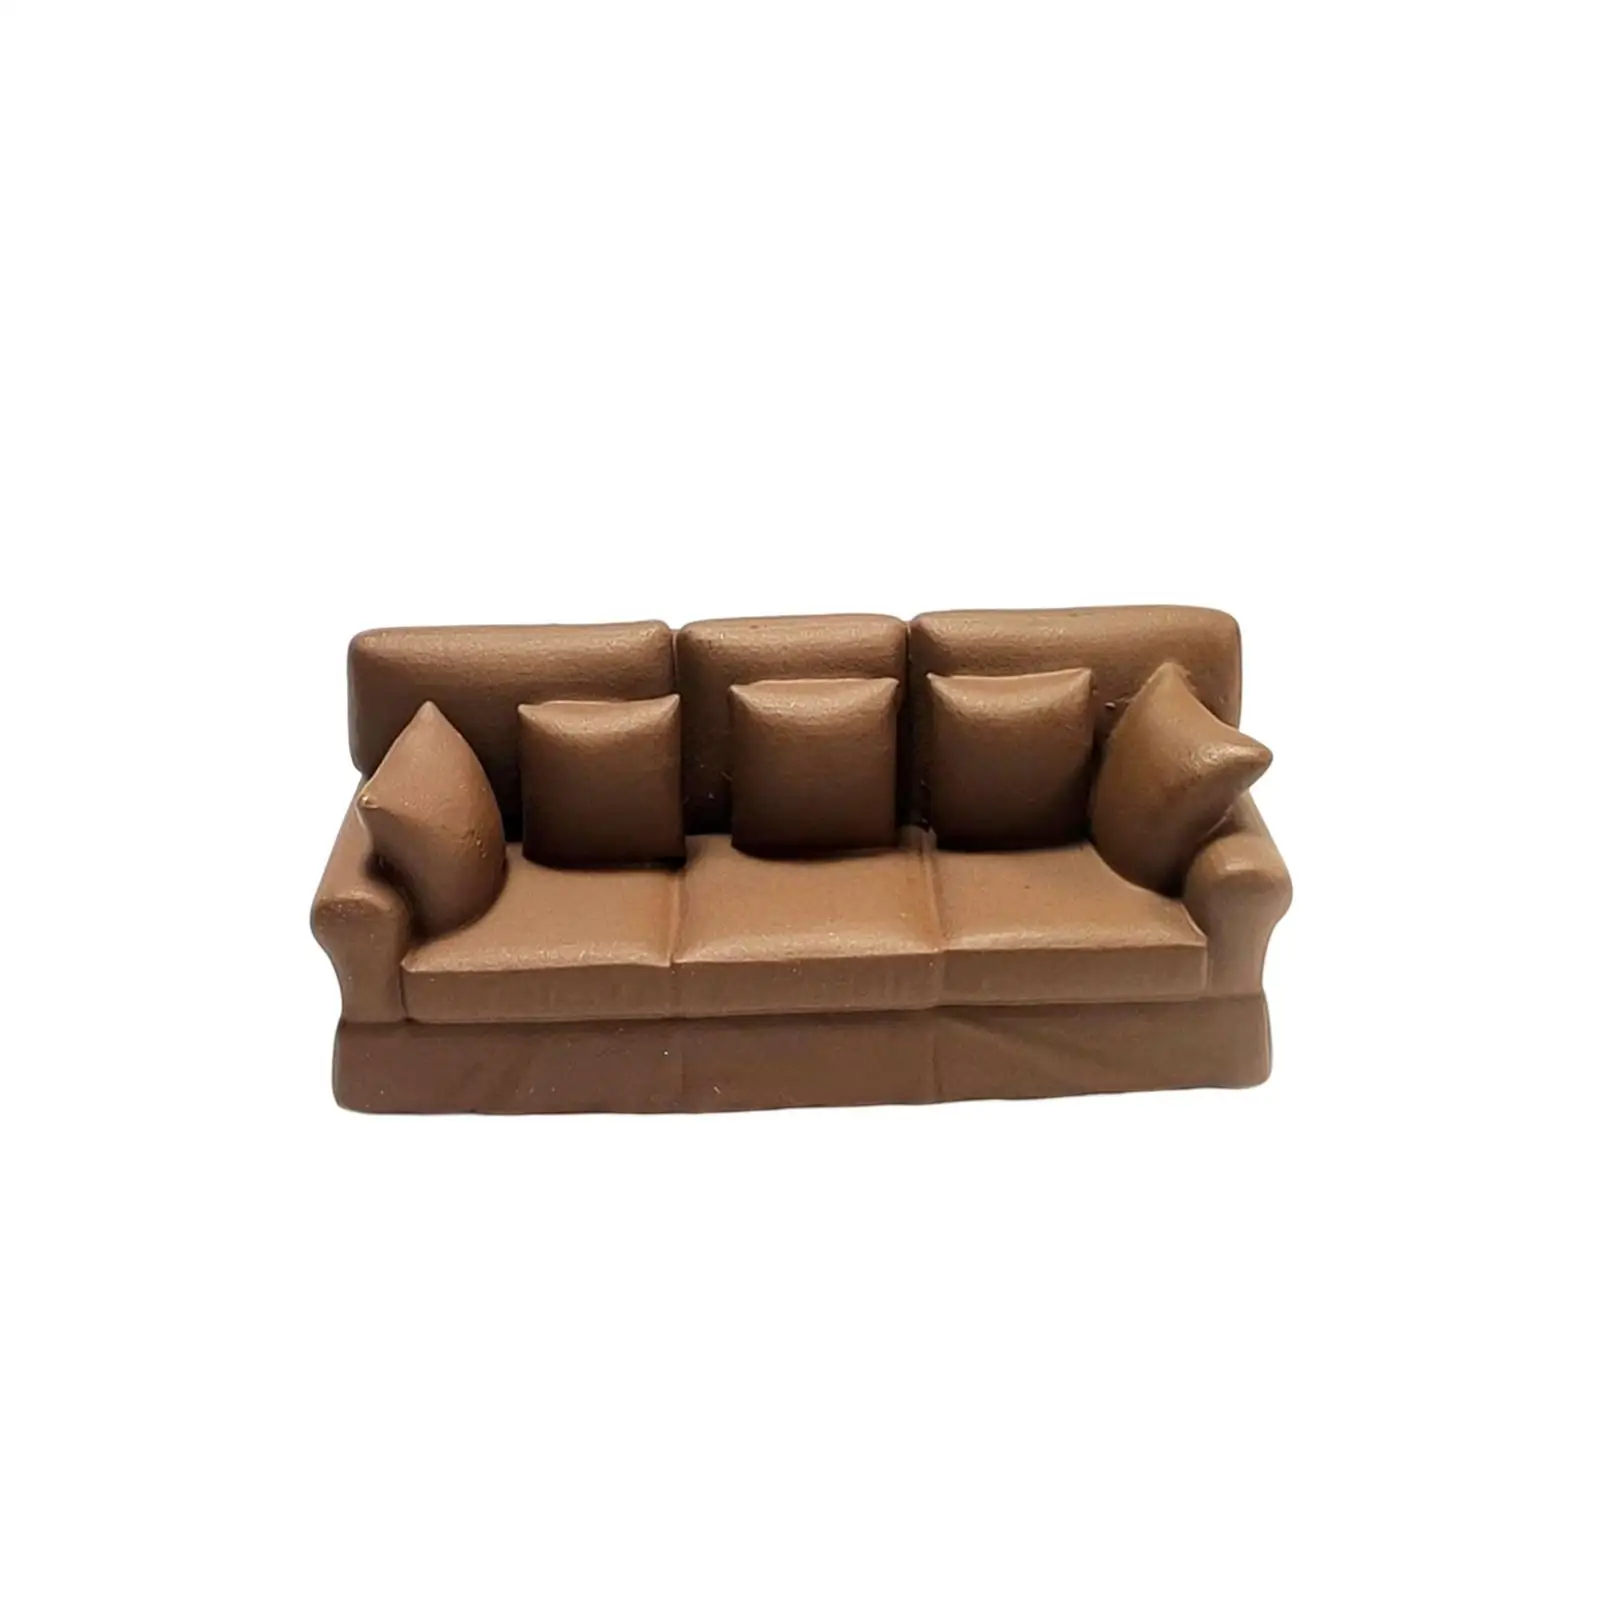 1/64 Mini Ornaments Furniture Miniature Resin Sofa Model for Playhouses, Studio